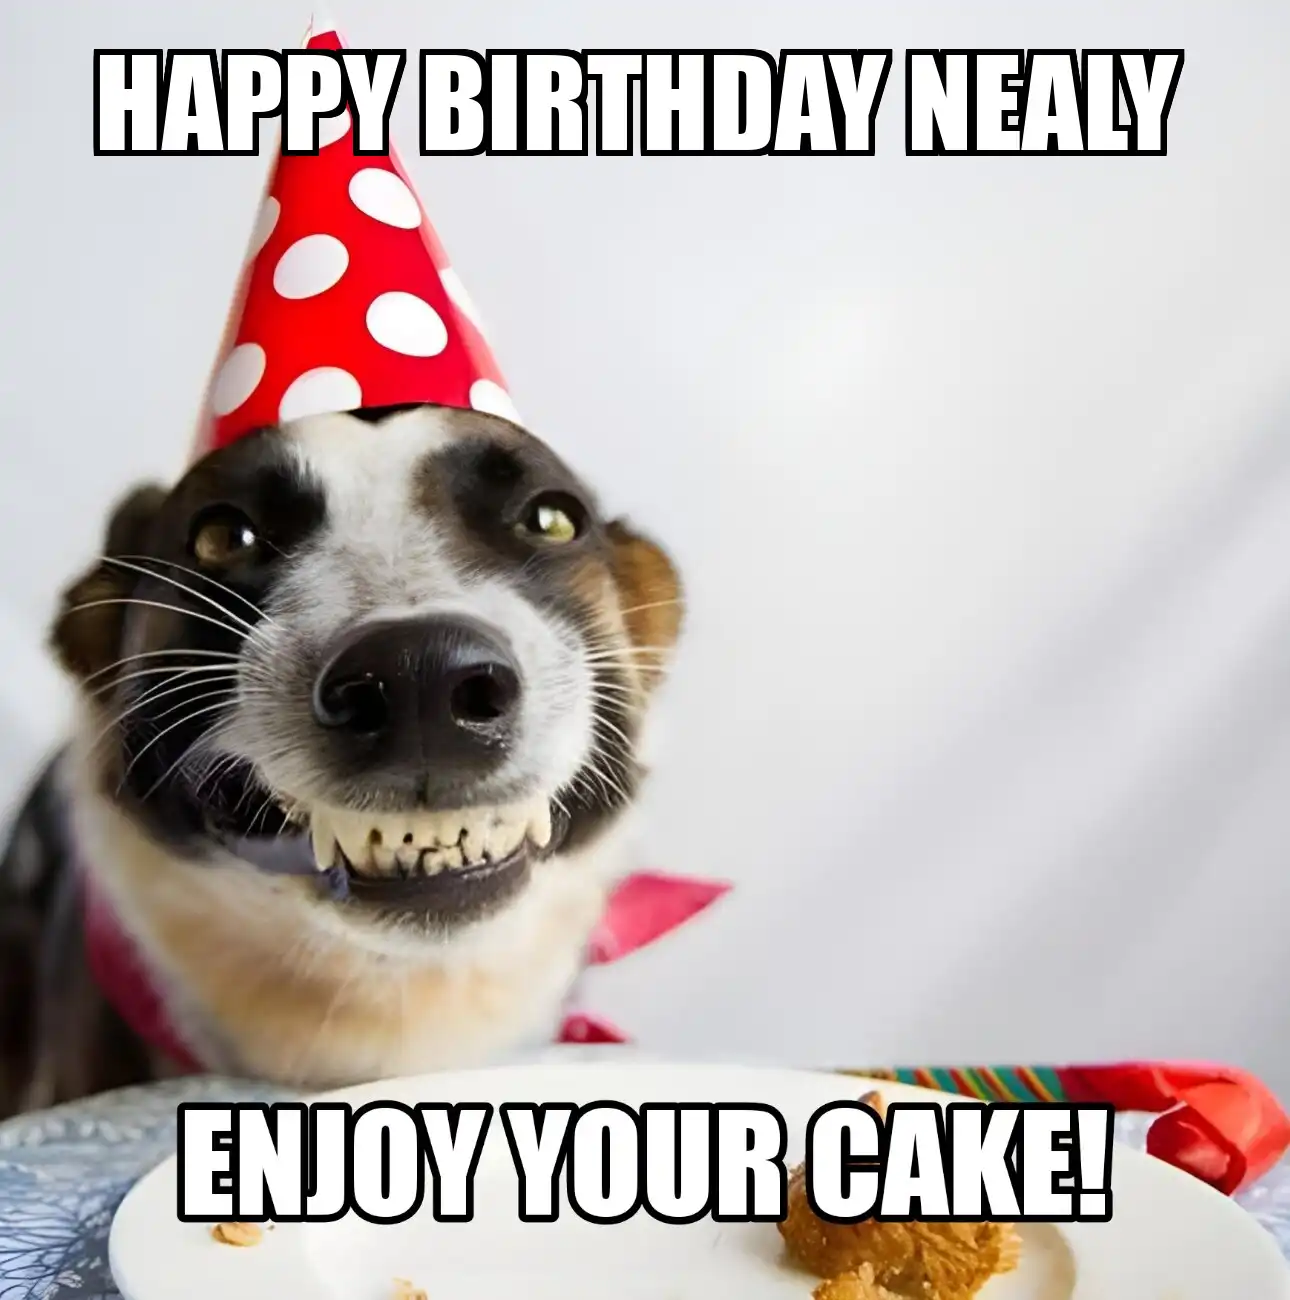 Happy Birthday Nealy Enjoy Your Cake Dog Meme